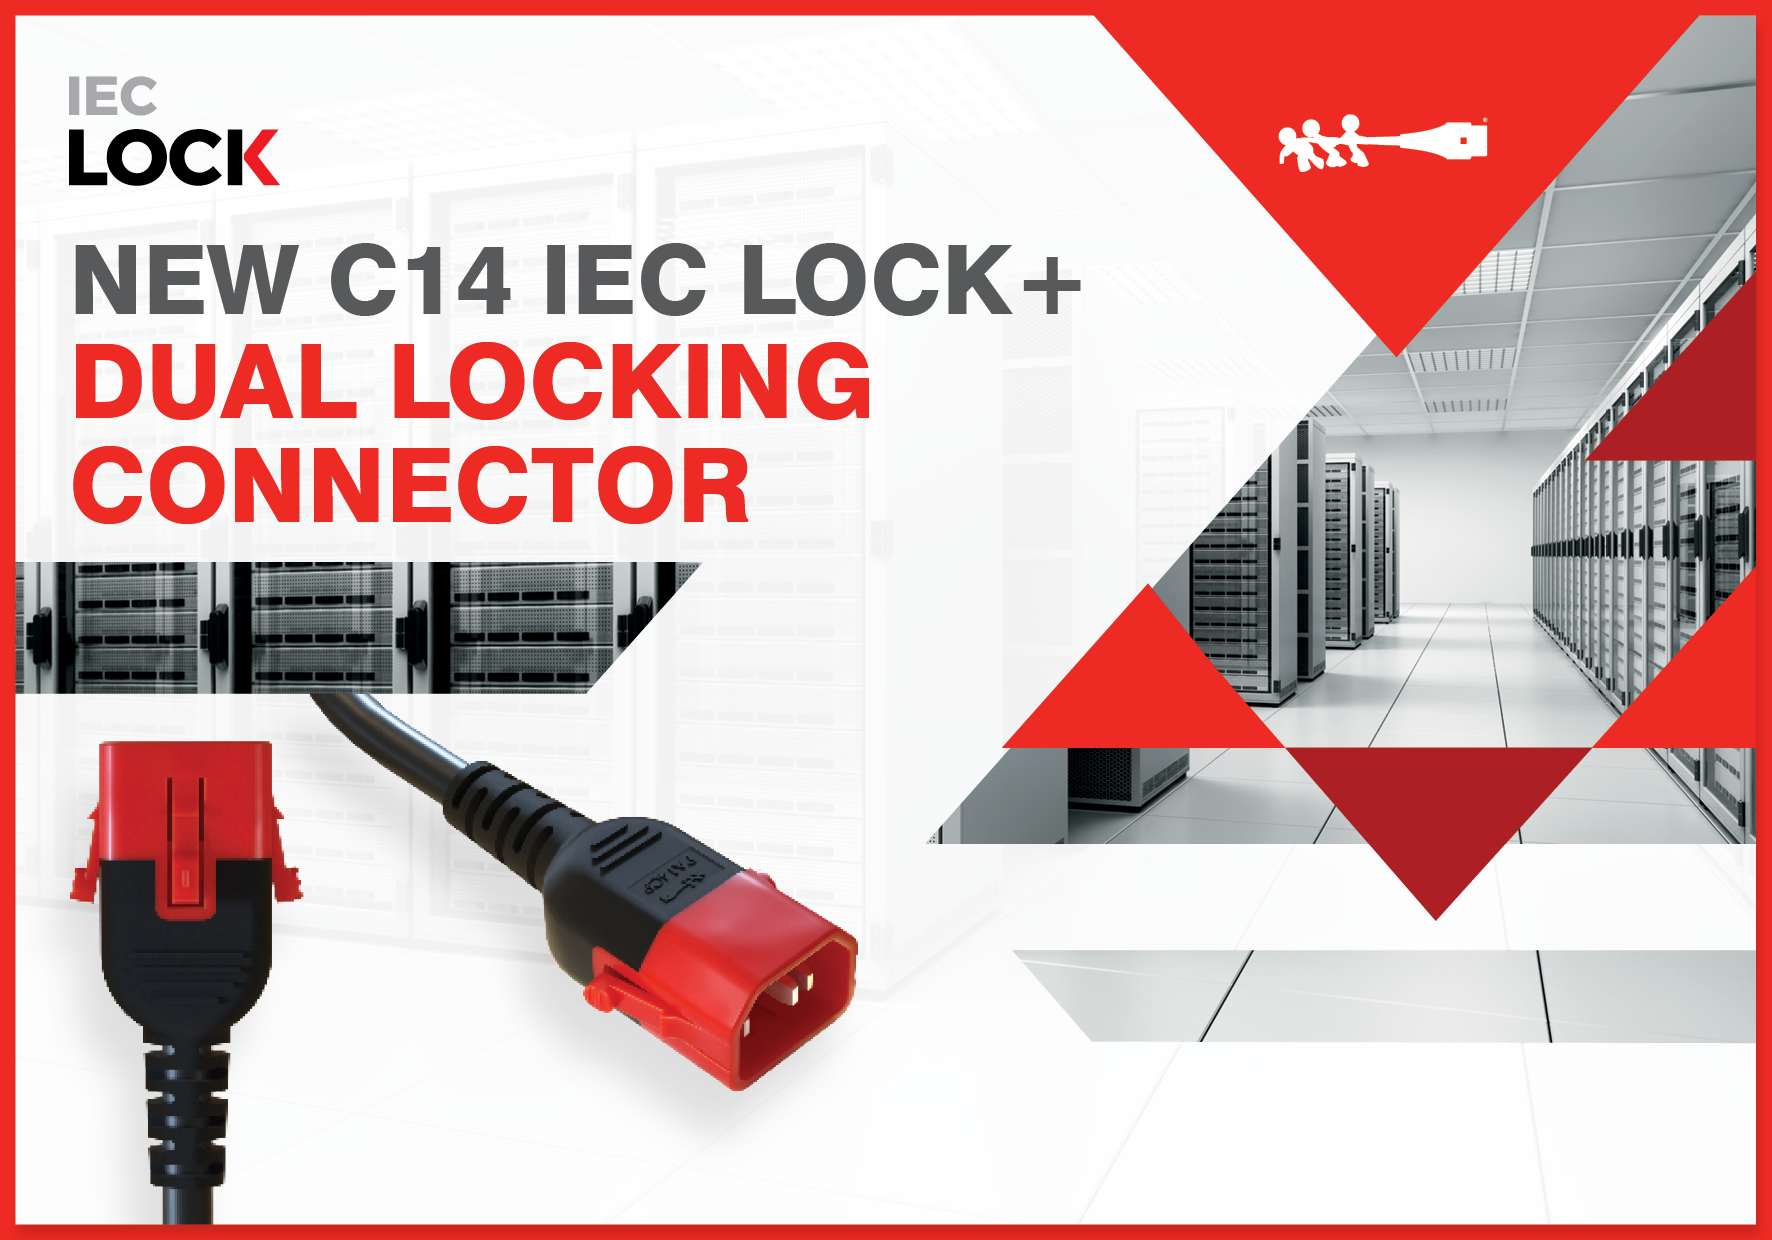 First dual locking C14 connector added to IEC Lock™ range